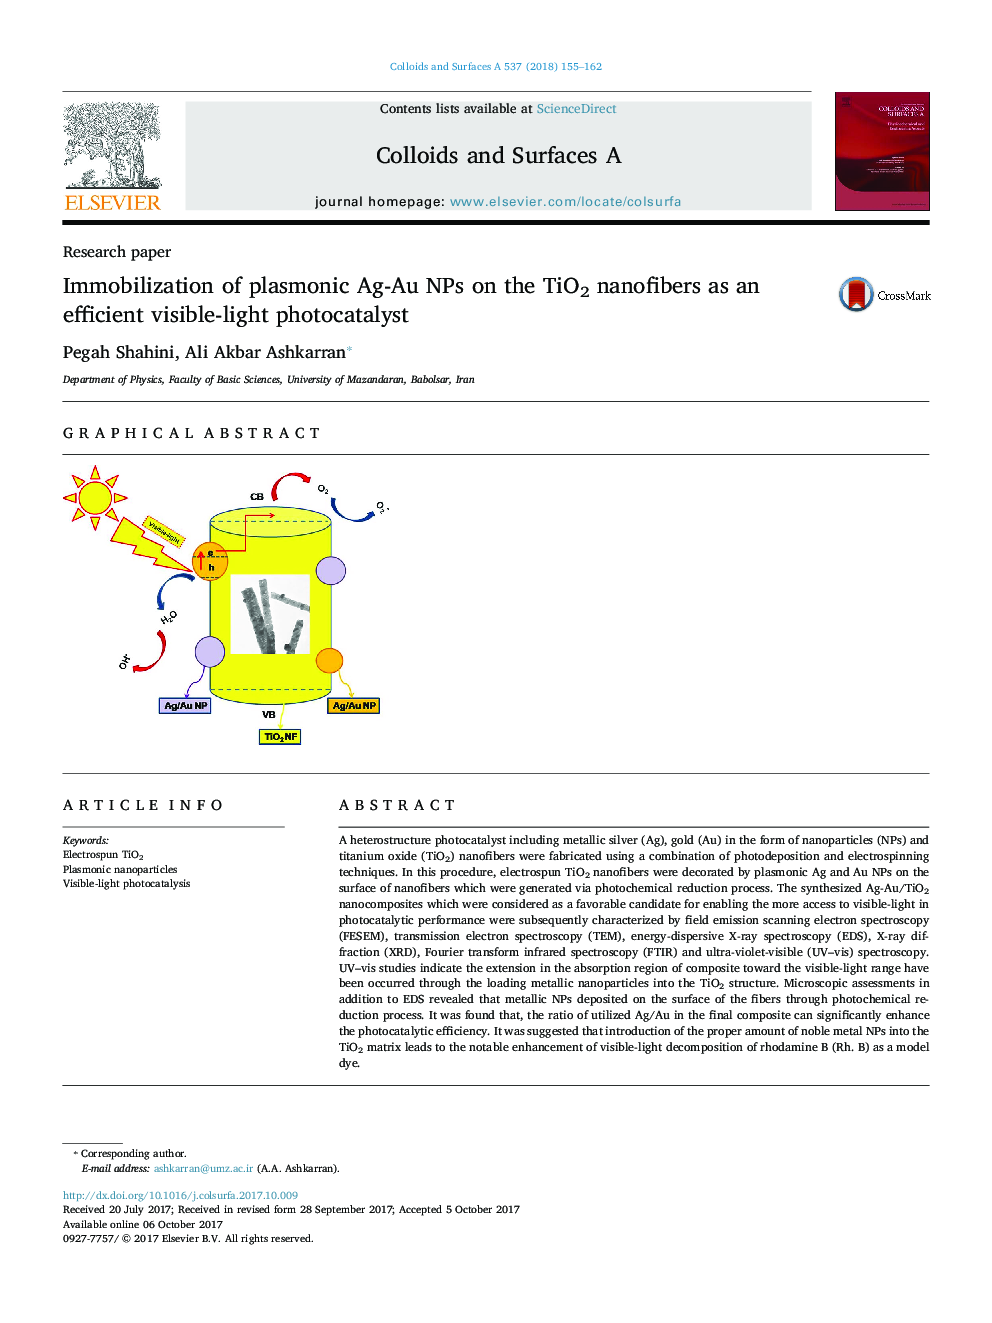 Immobilization of plasmonic Ag-Au NPs on the TiO2 nanofibers as an efficient visible-light photocatalyst